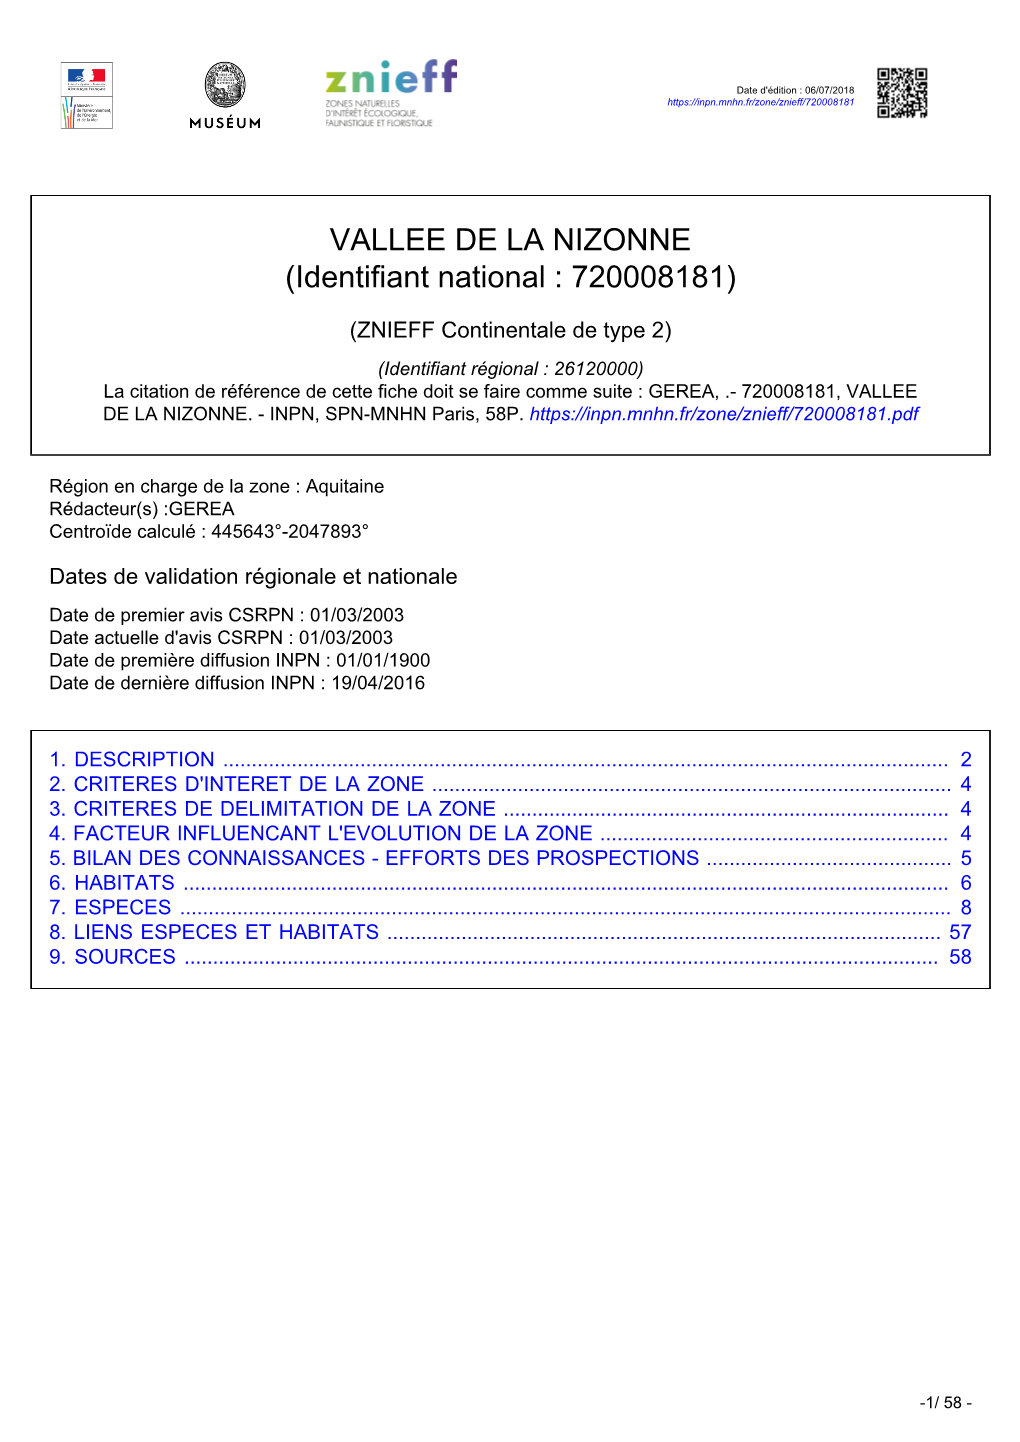 VALLEE DE LA NIZONNE (Identifiant National : 720008181)